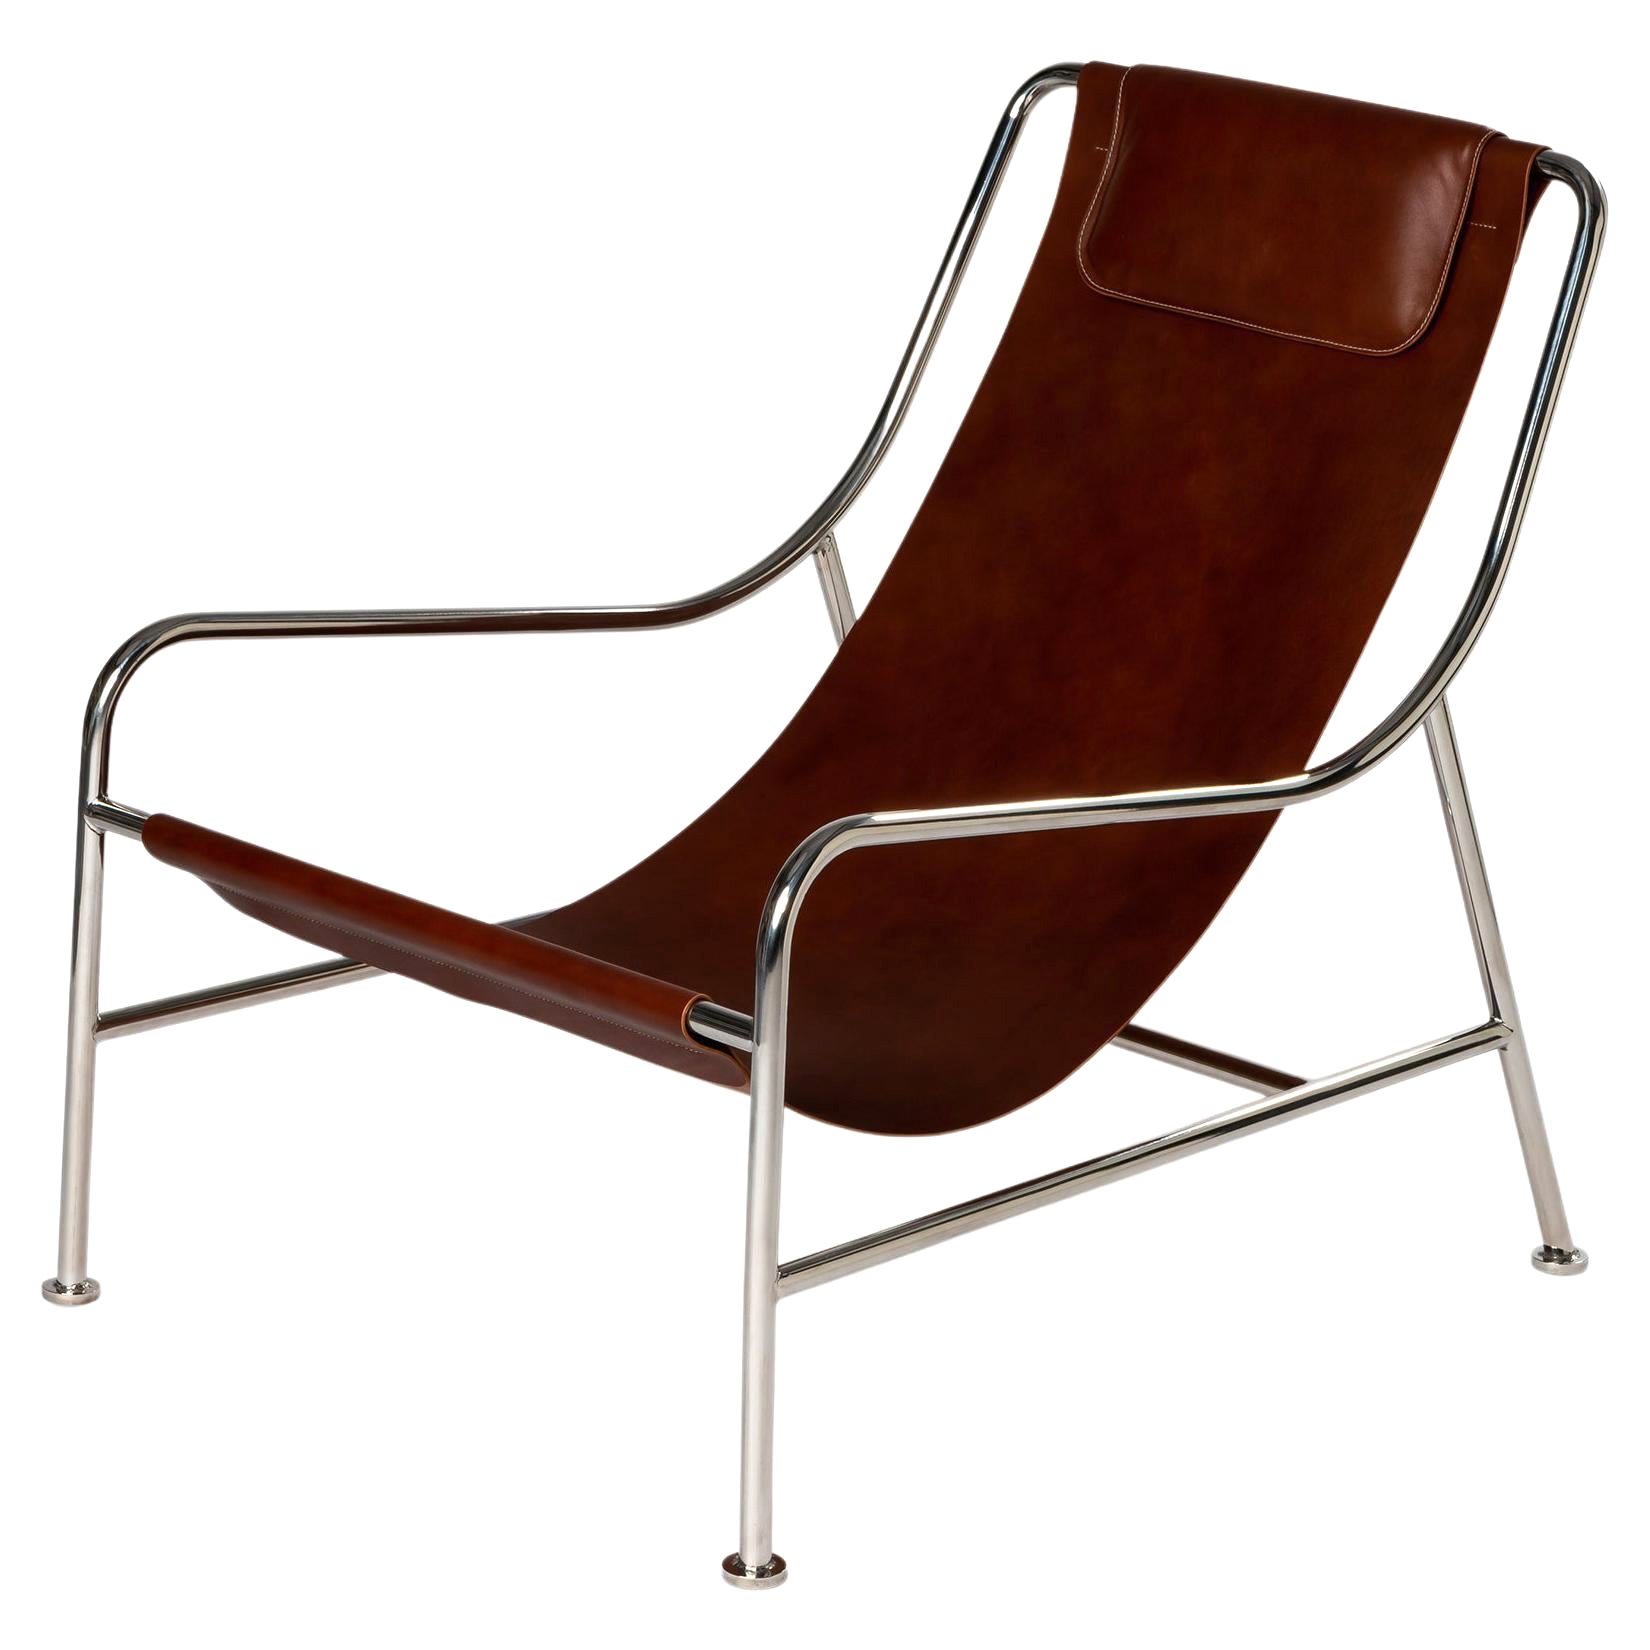 Fauteuil de salon moderne minimaliste en cuir marron et acier inoxydable poli